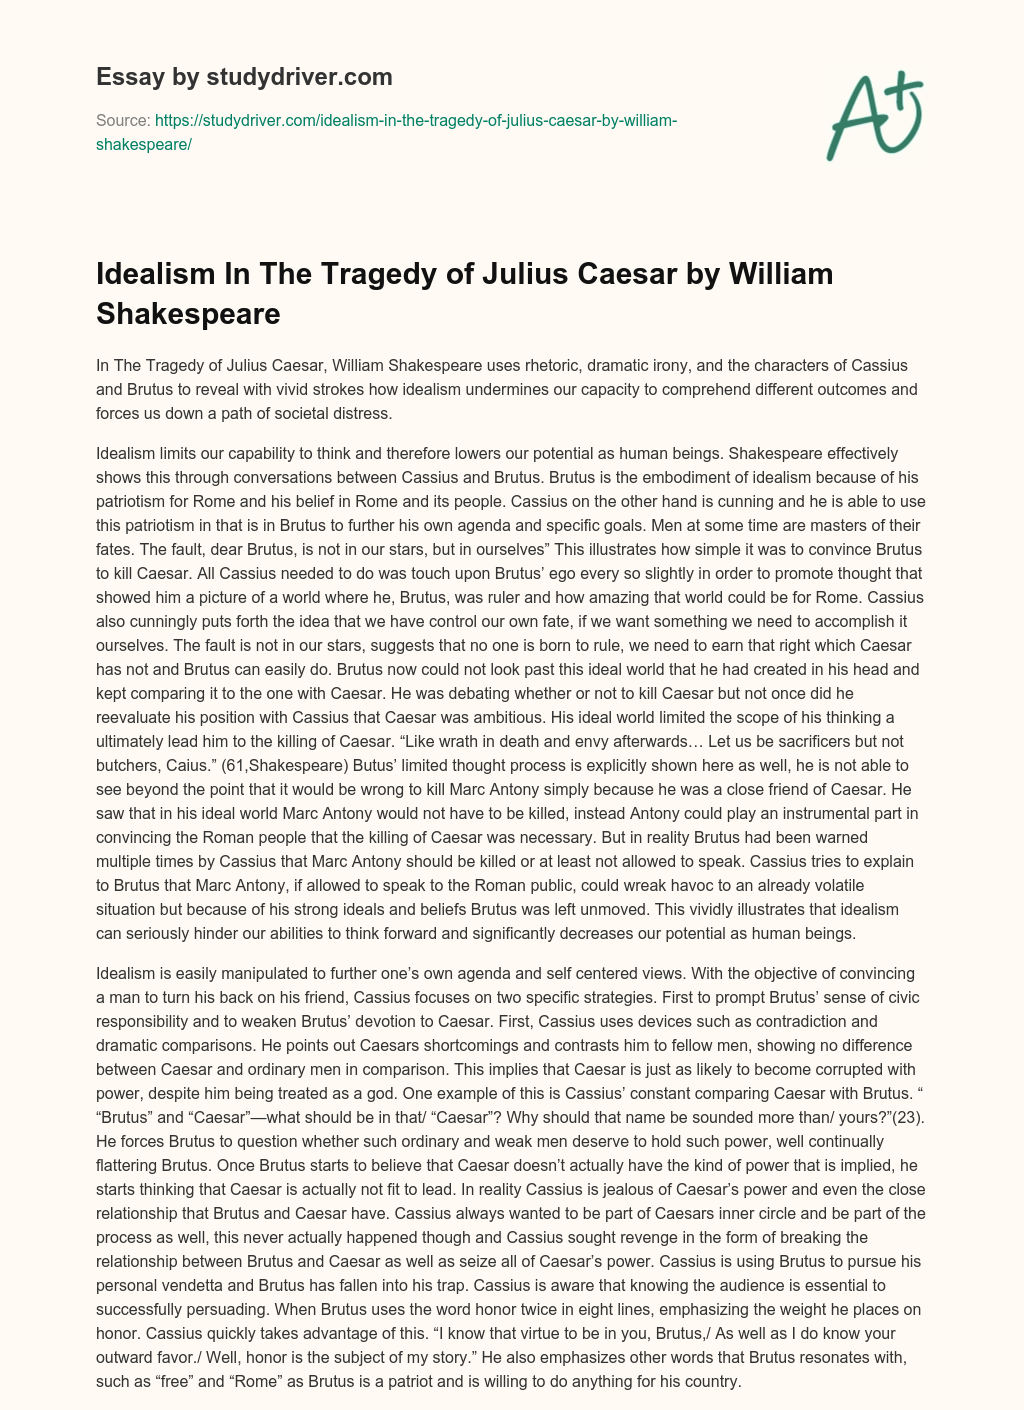 Idealism in the Tragedy of Julius Caesar by William Shakespeare essay